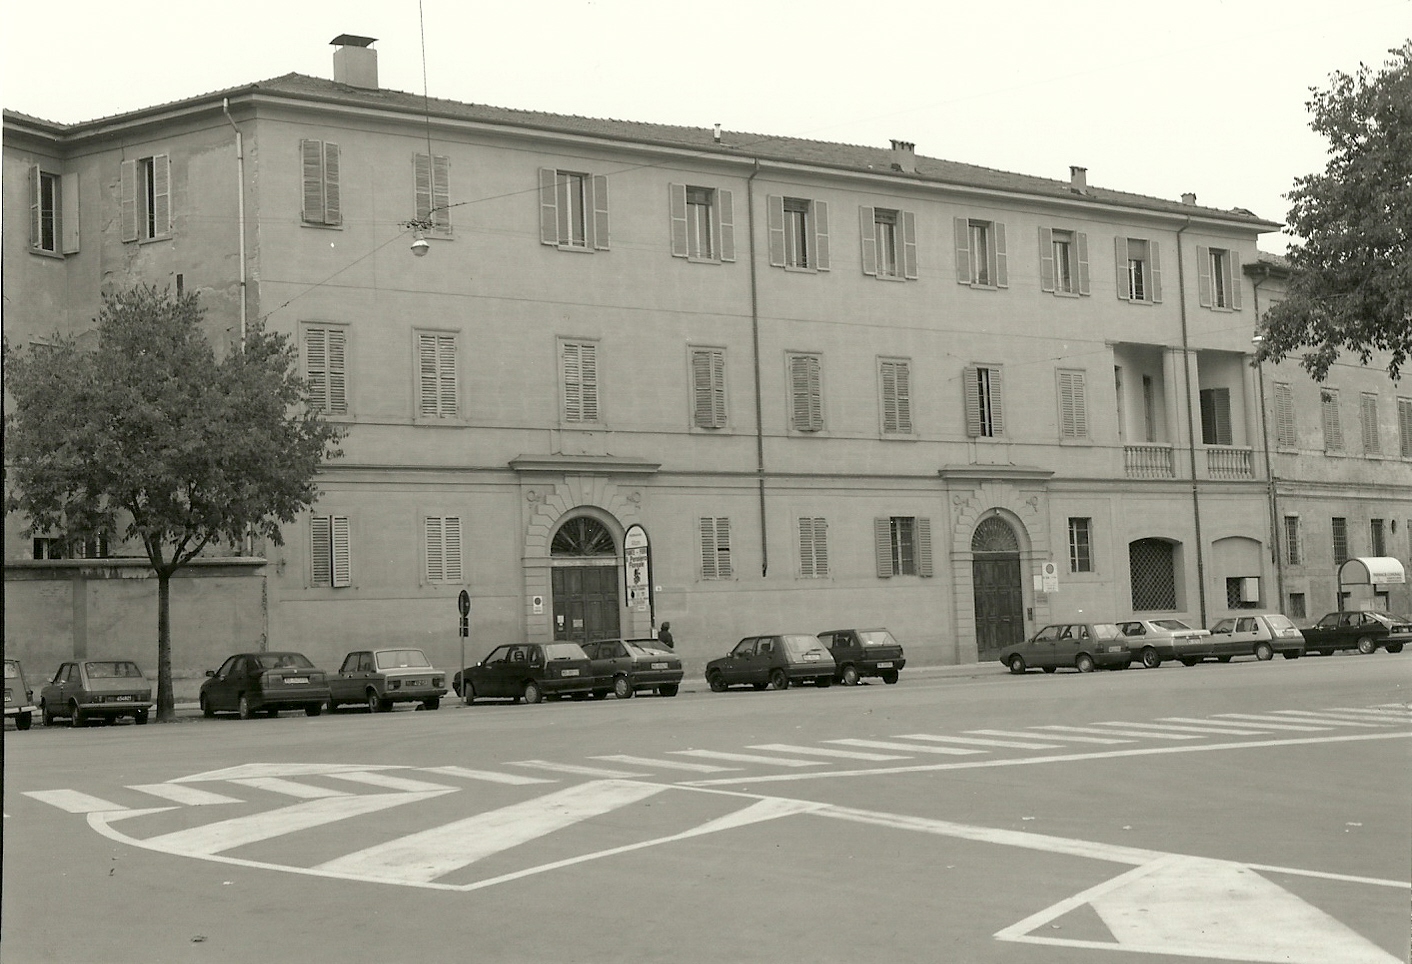 Scuola e teatro anatomico (teatro, anatomico) - Modena (MO)  (sec. XVIII)